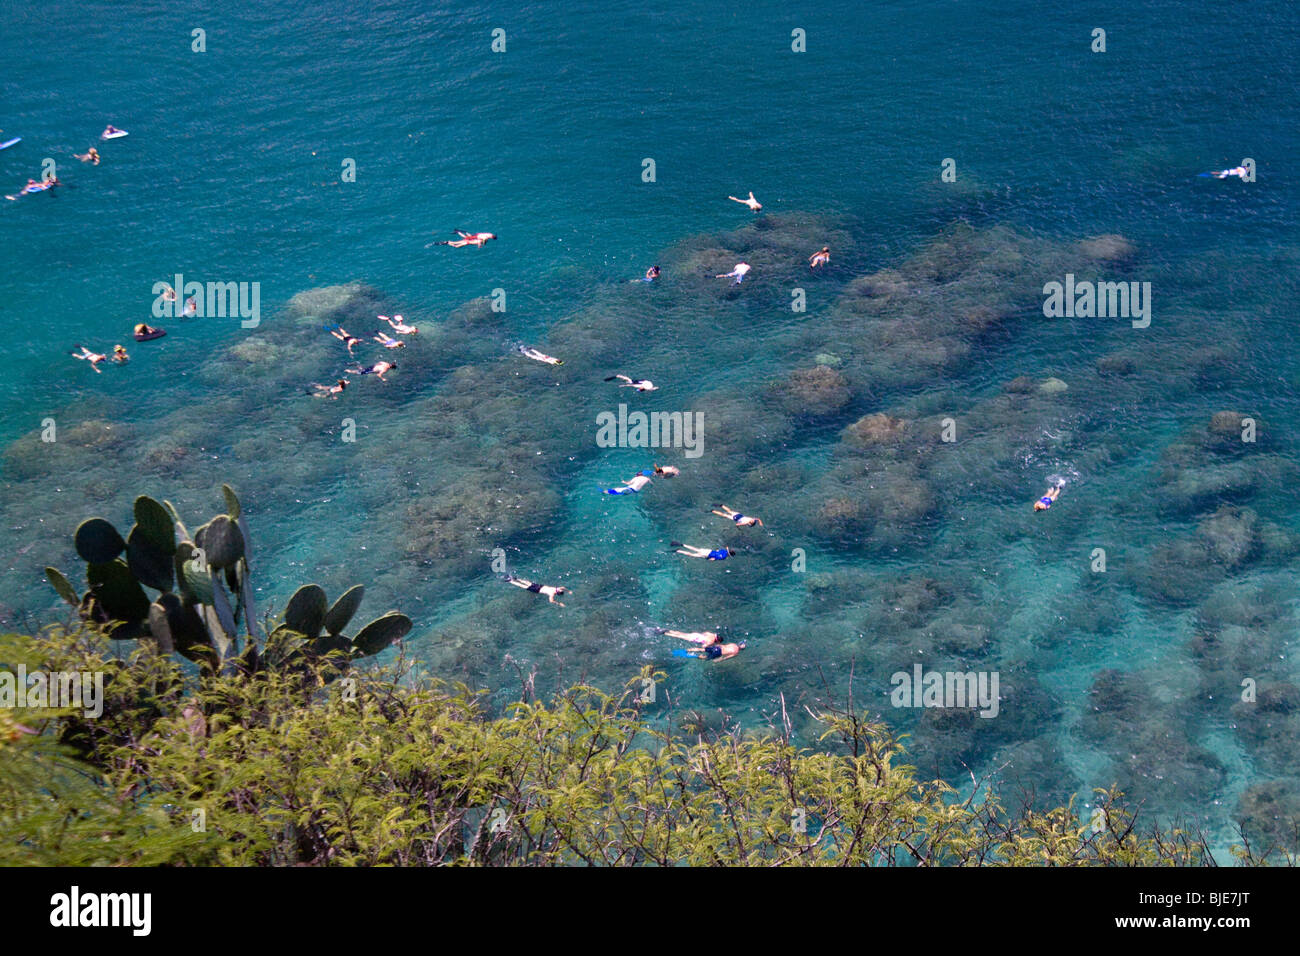 Snorkelers enjoy coral reefs and watching fish at Honolua Bay, Maui, Hawaii Stock Photo